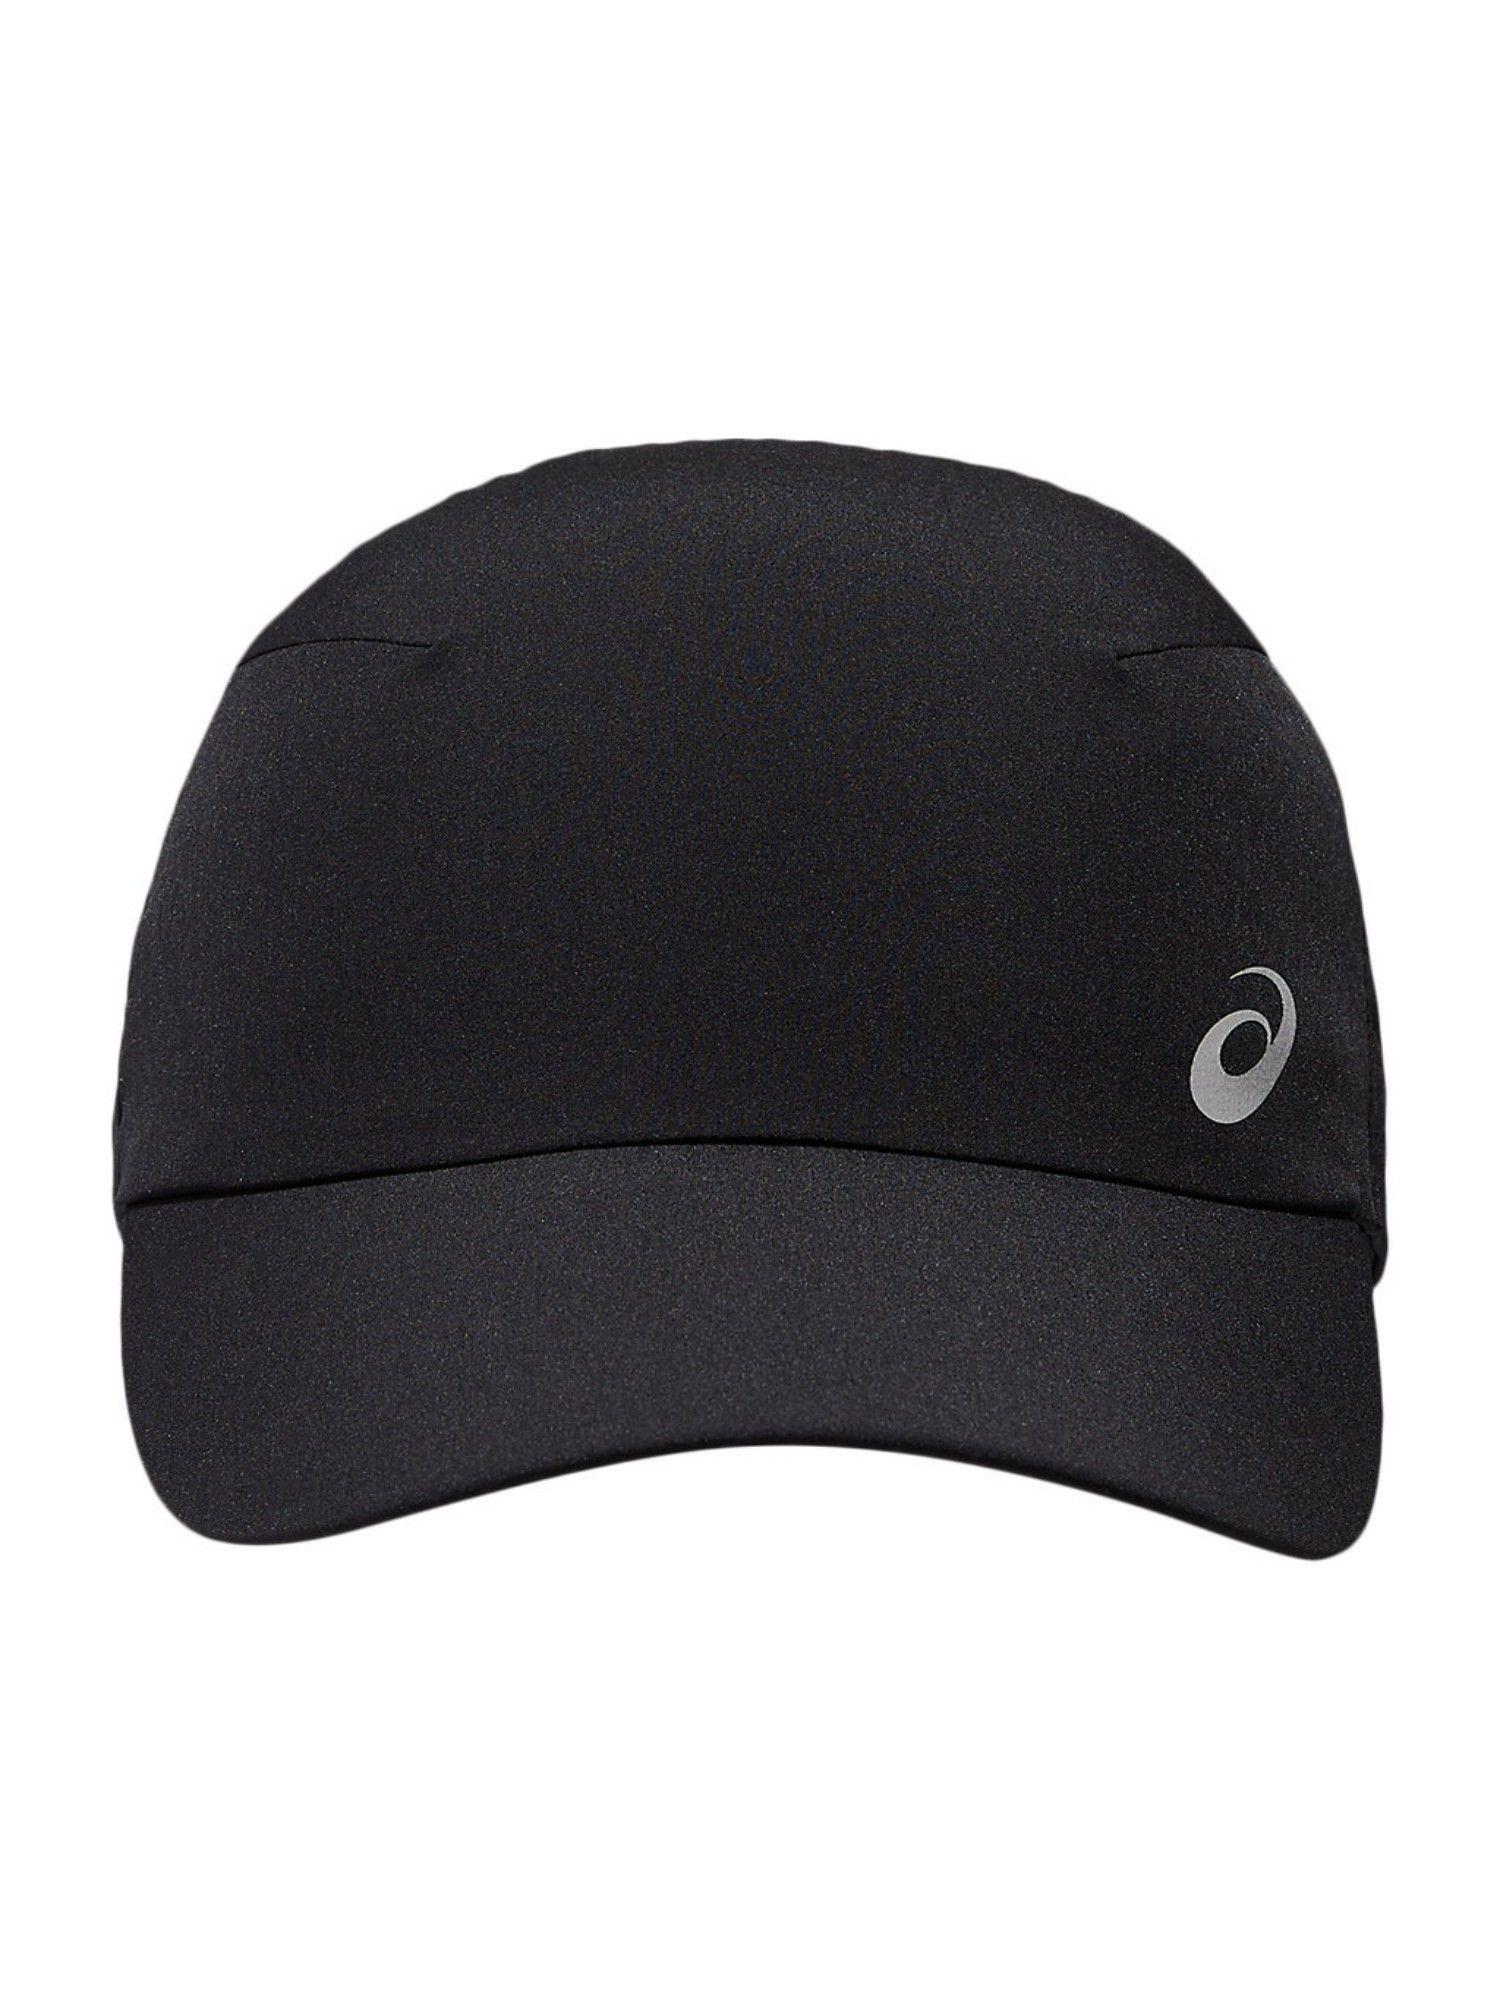 woven-black-unisex-cap